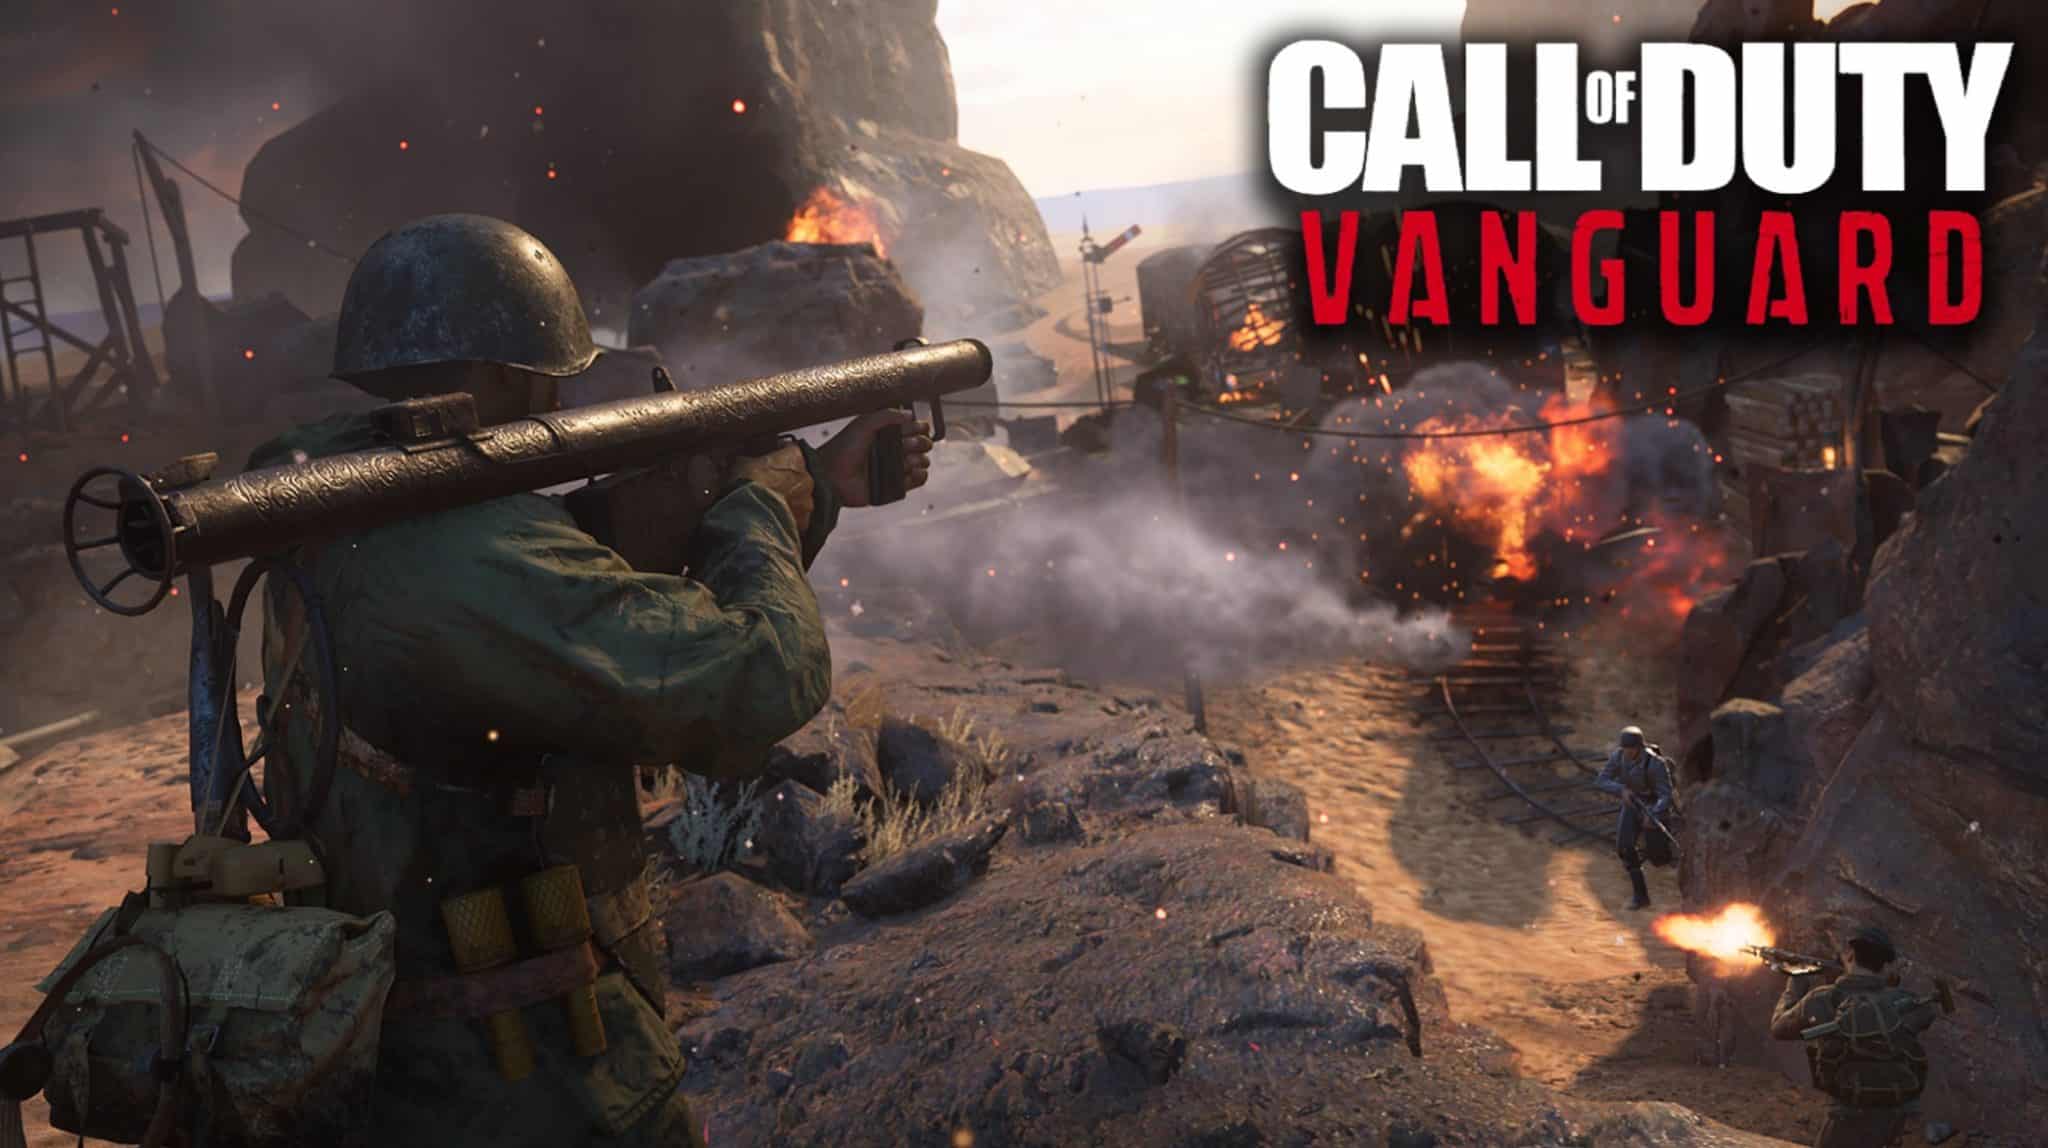 Call of Duty Vanguard Oyununa Ait İlk Görseller Sızdırıldı